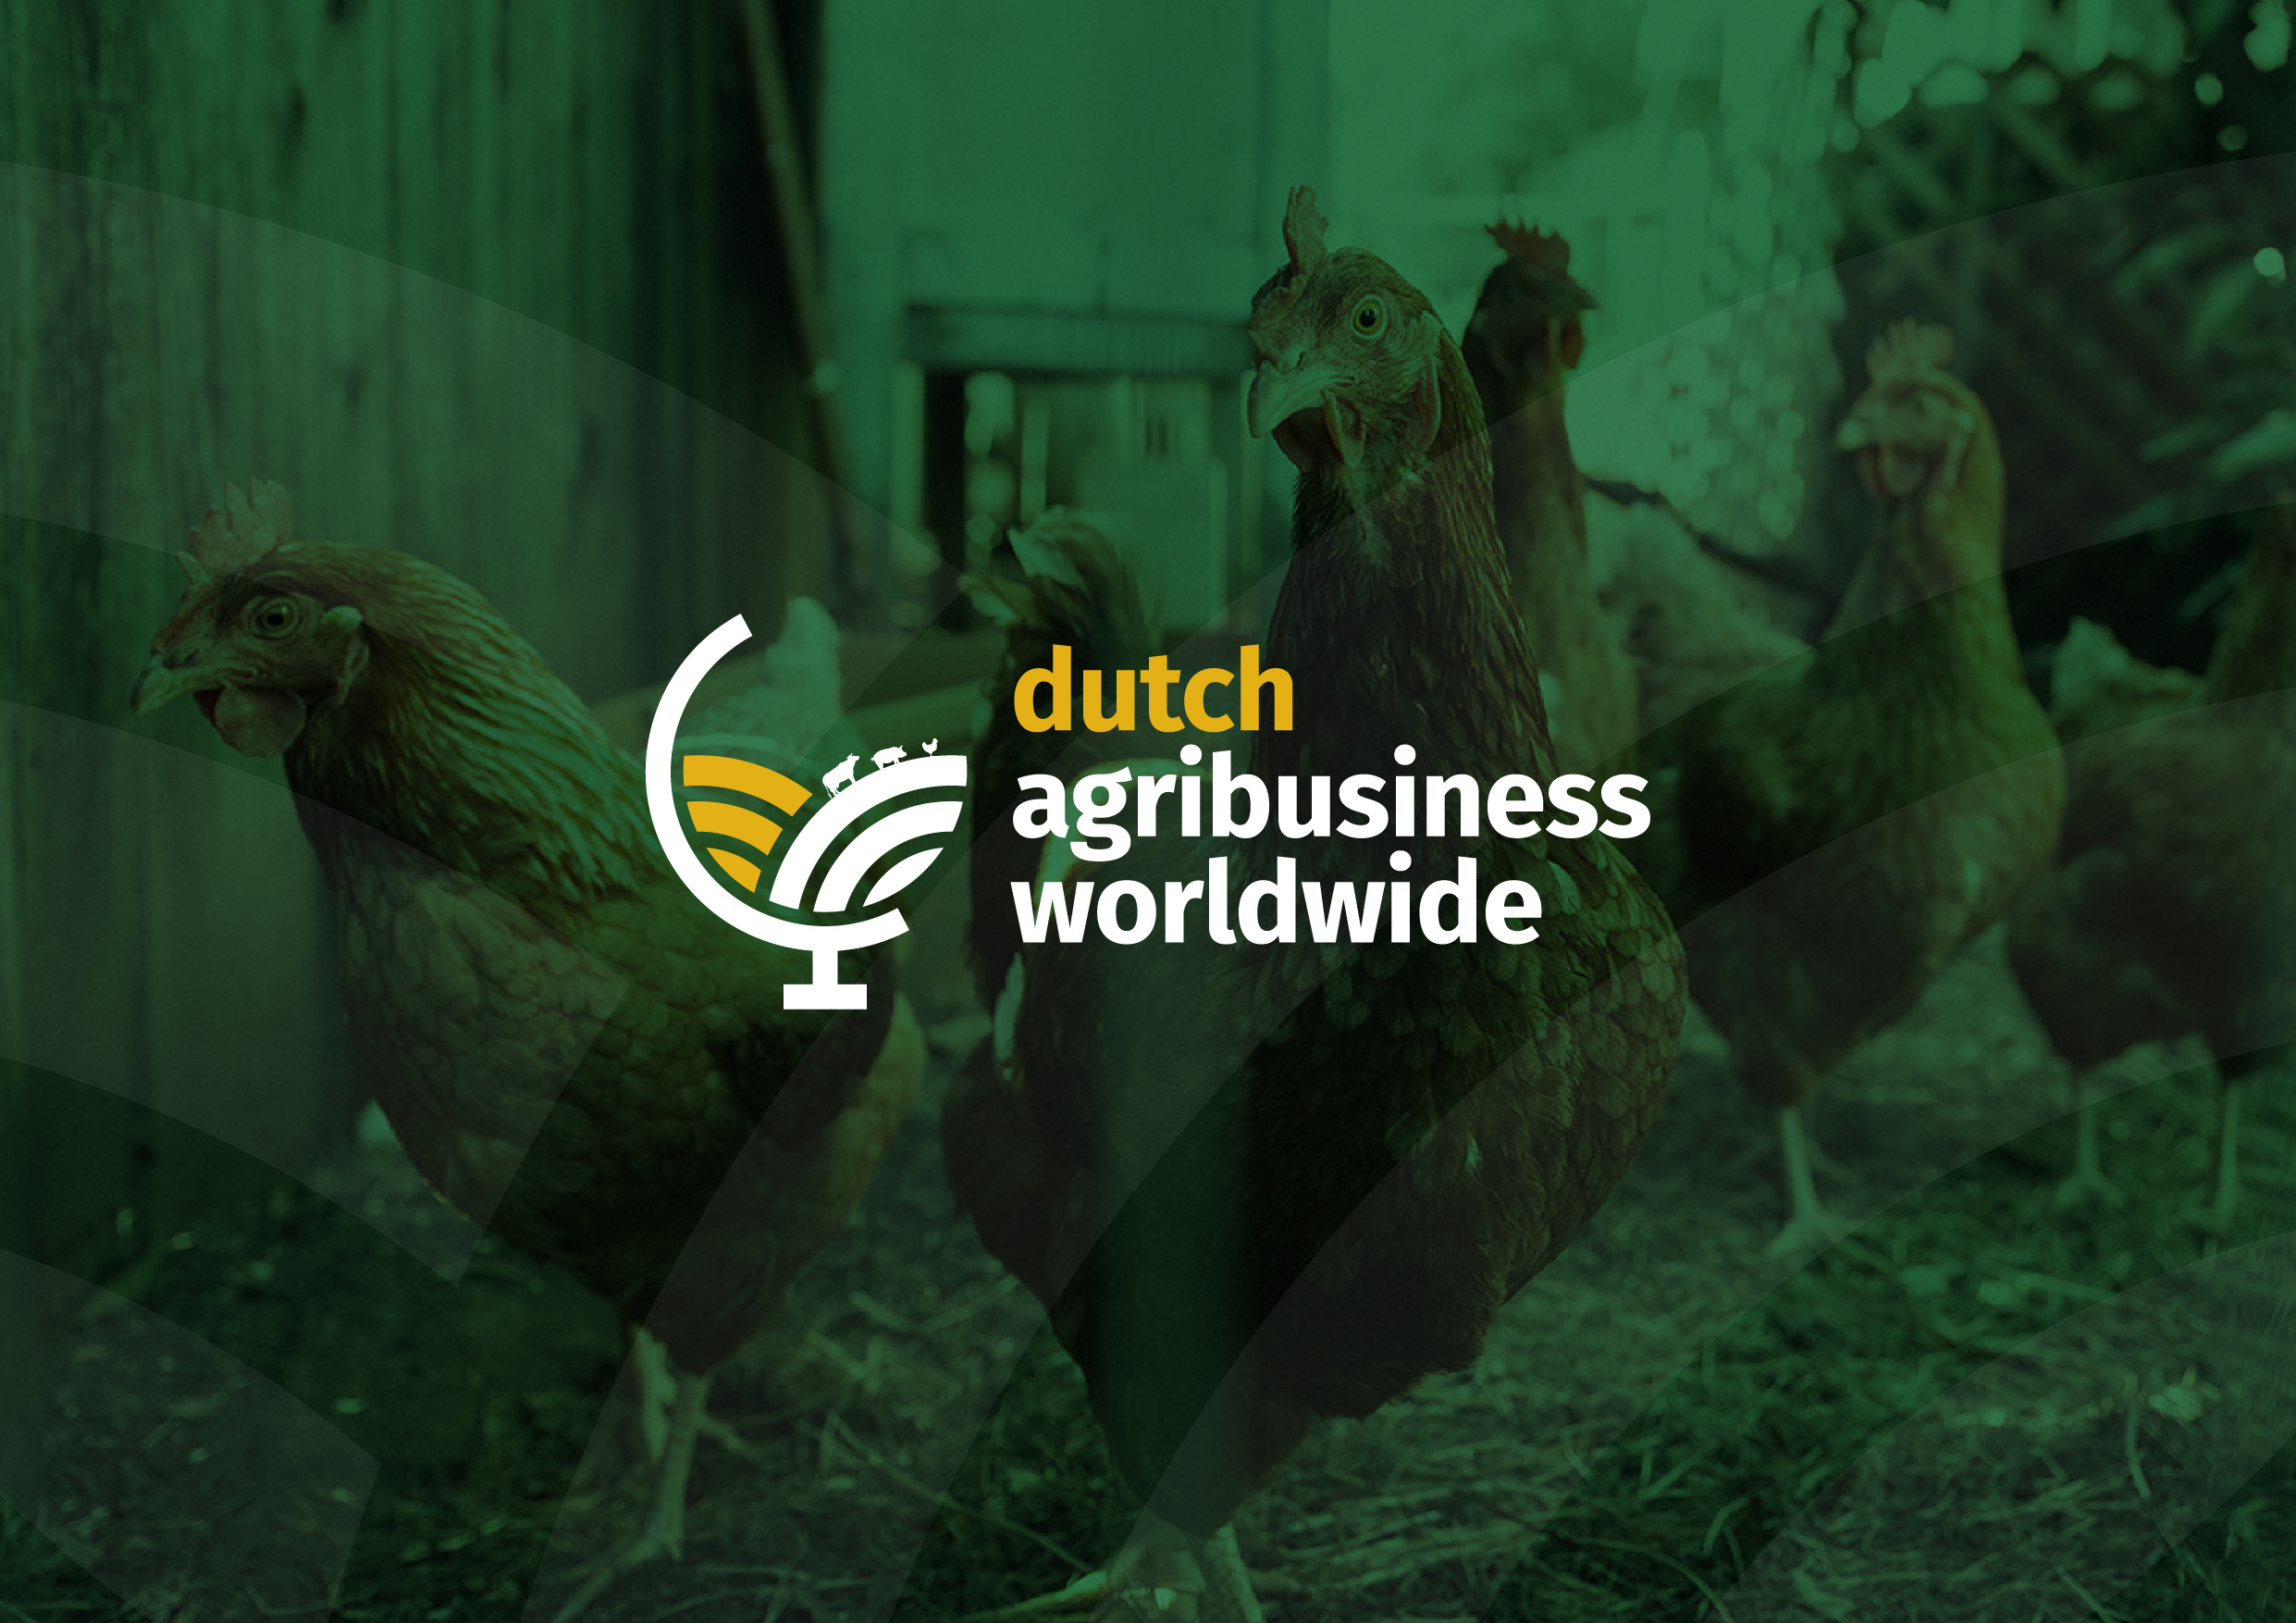 Dutch Agribusiness Worldwide logo huisstijl DAW many more